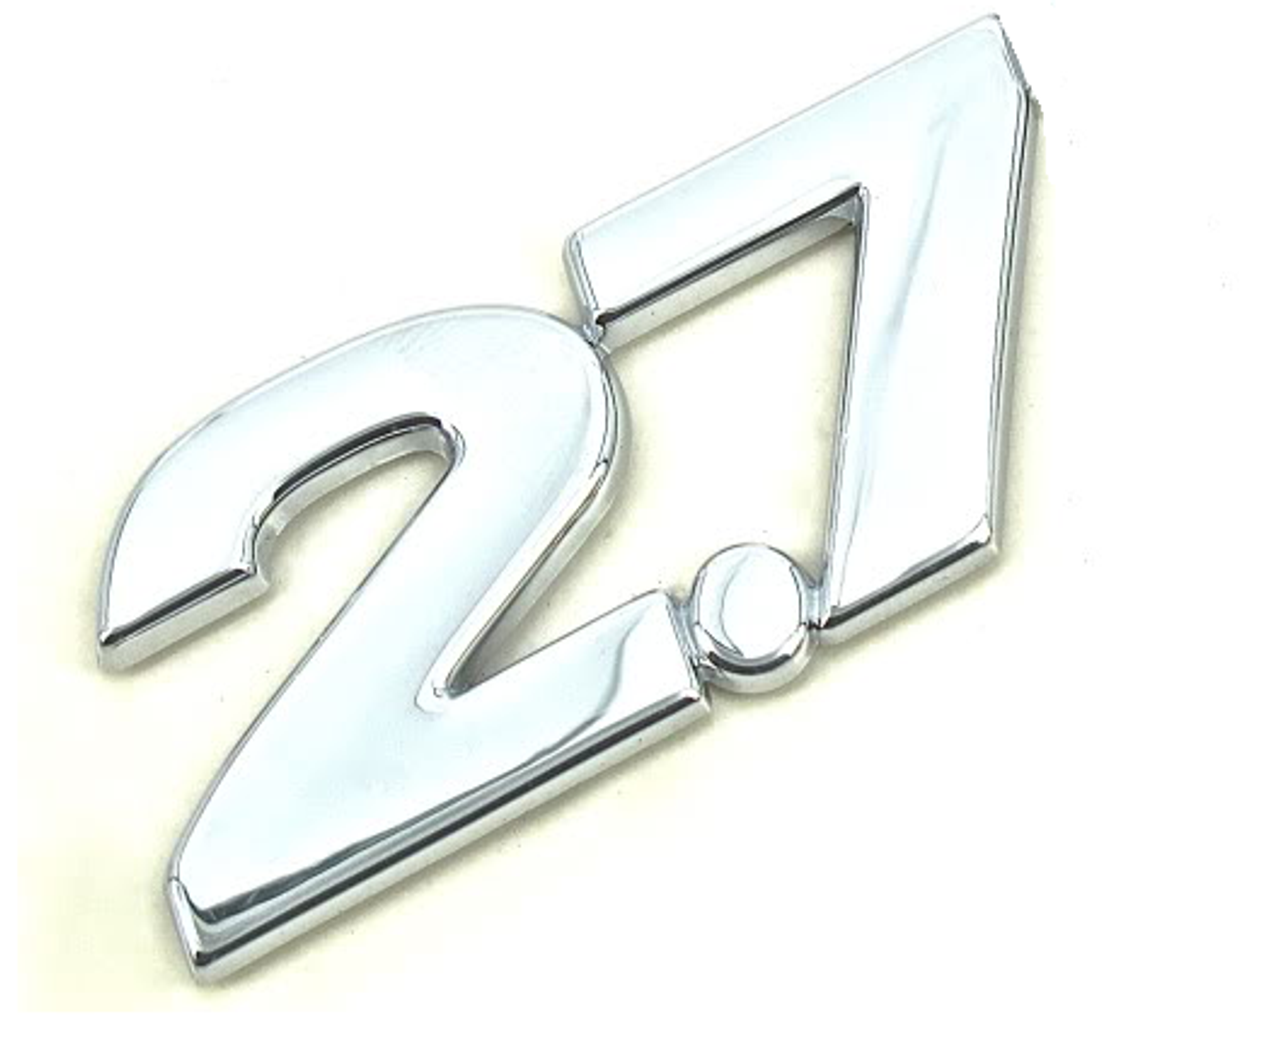 2.7 emblem ABS chrome plated car emblem